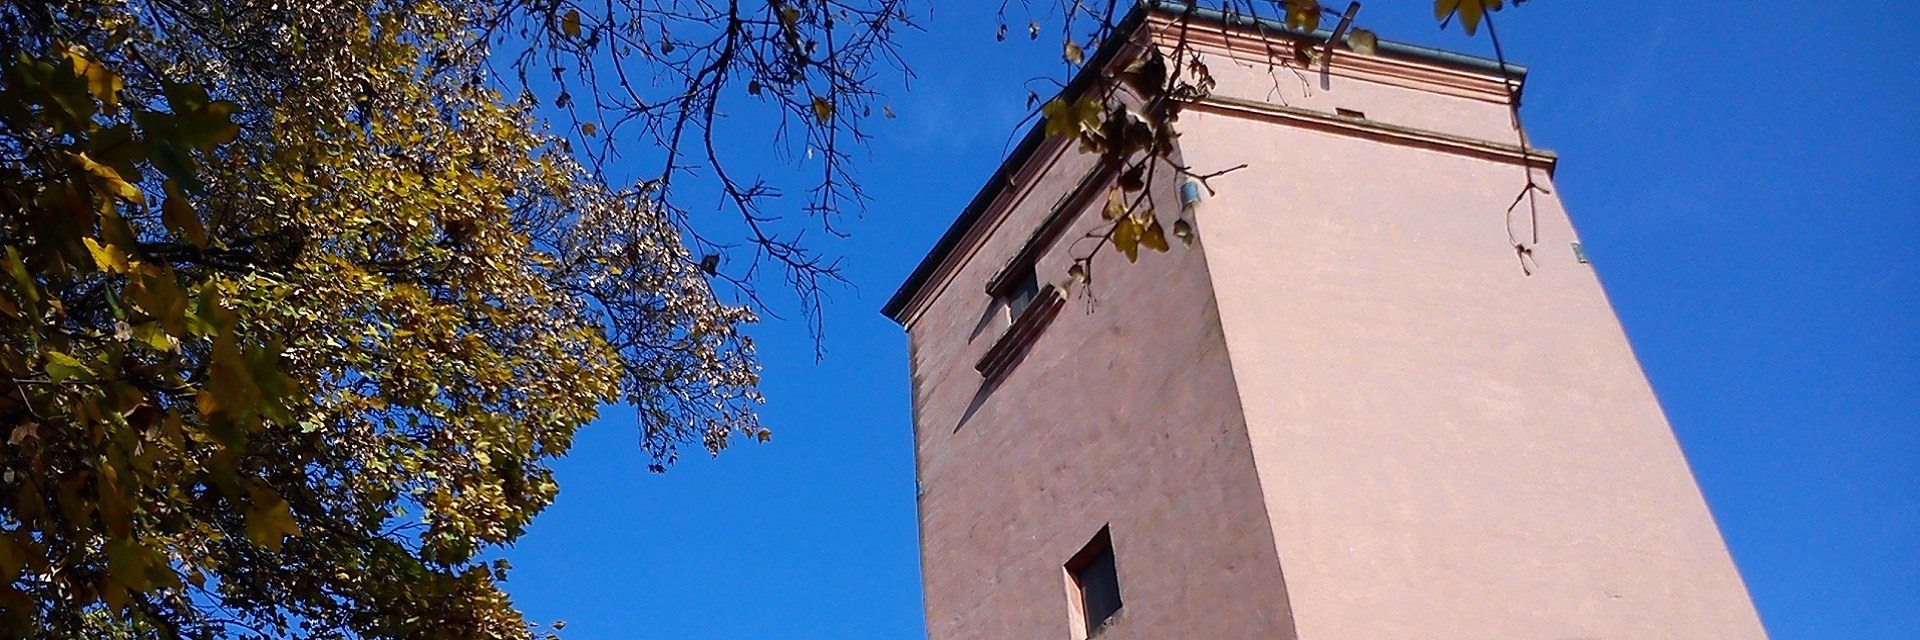 The pentagonal tower